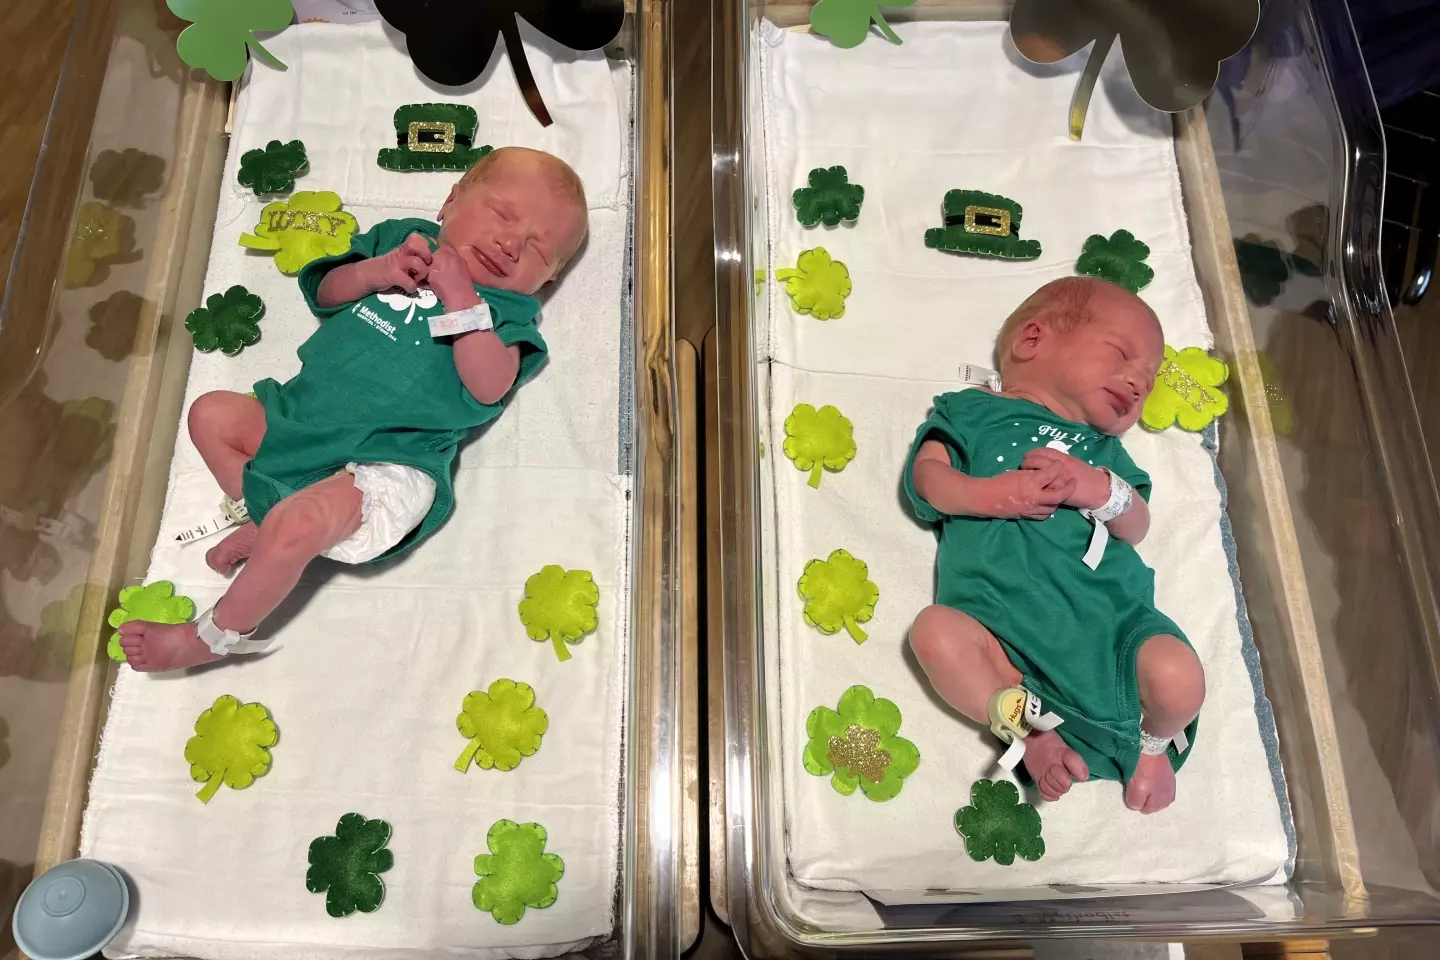 Two newborn babies in green onesies lying in hospital cribs.